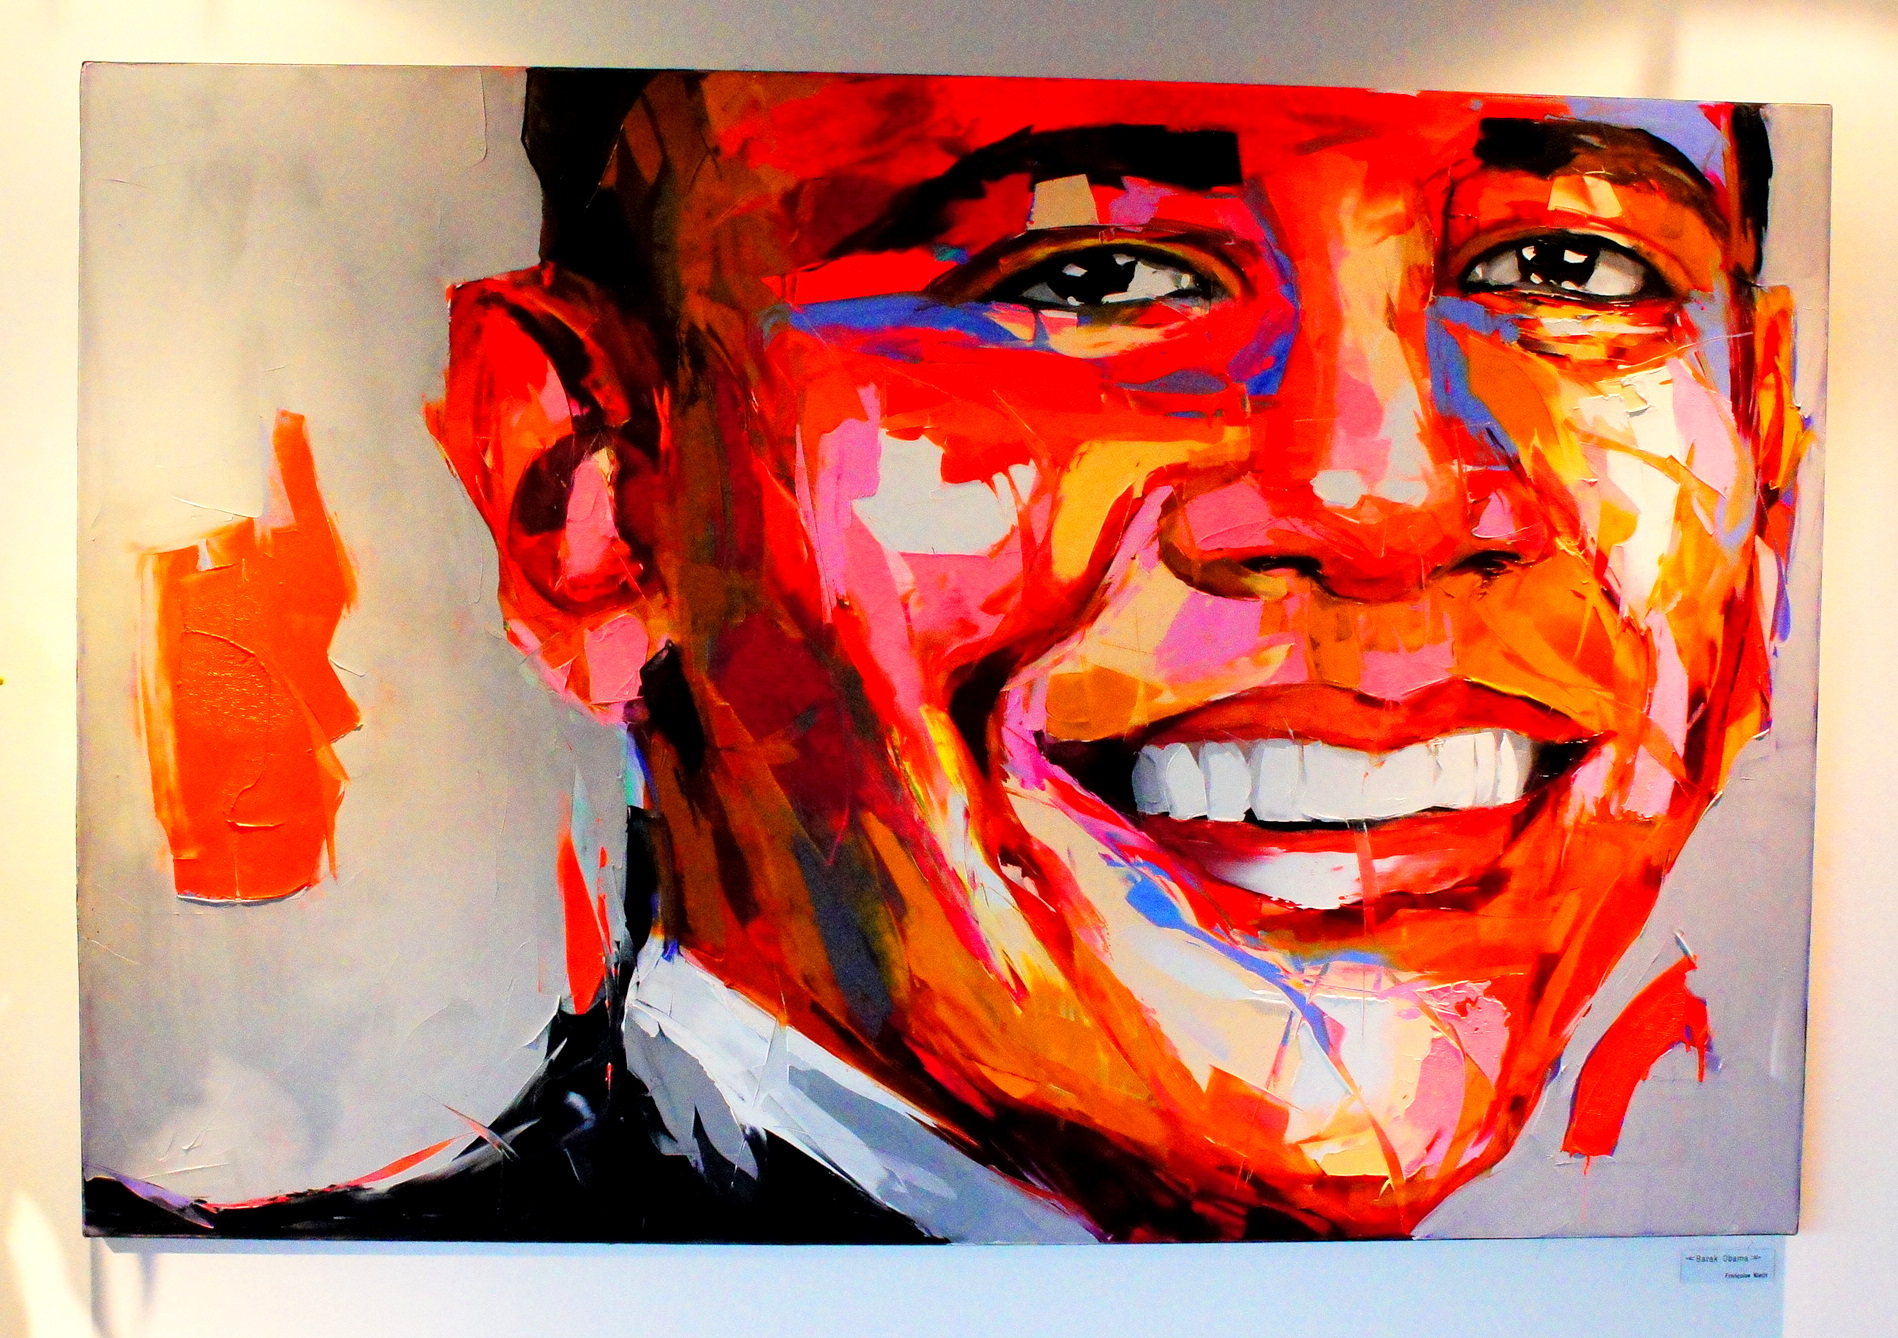 http://sparkingsnaps.blogspot.com/2013/12/paintings-of-barack-obama.html